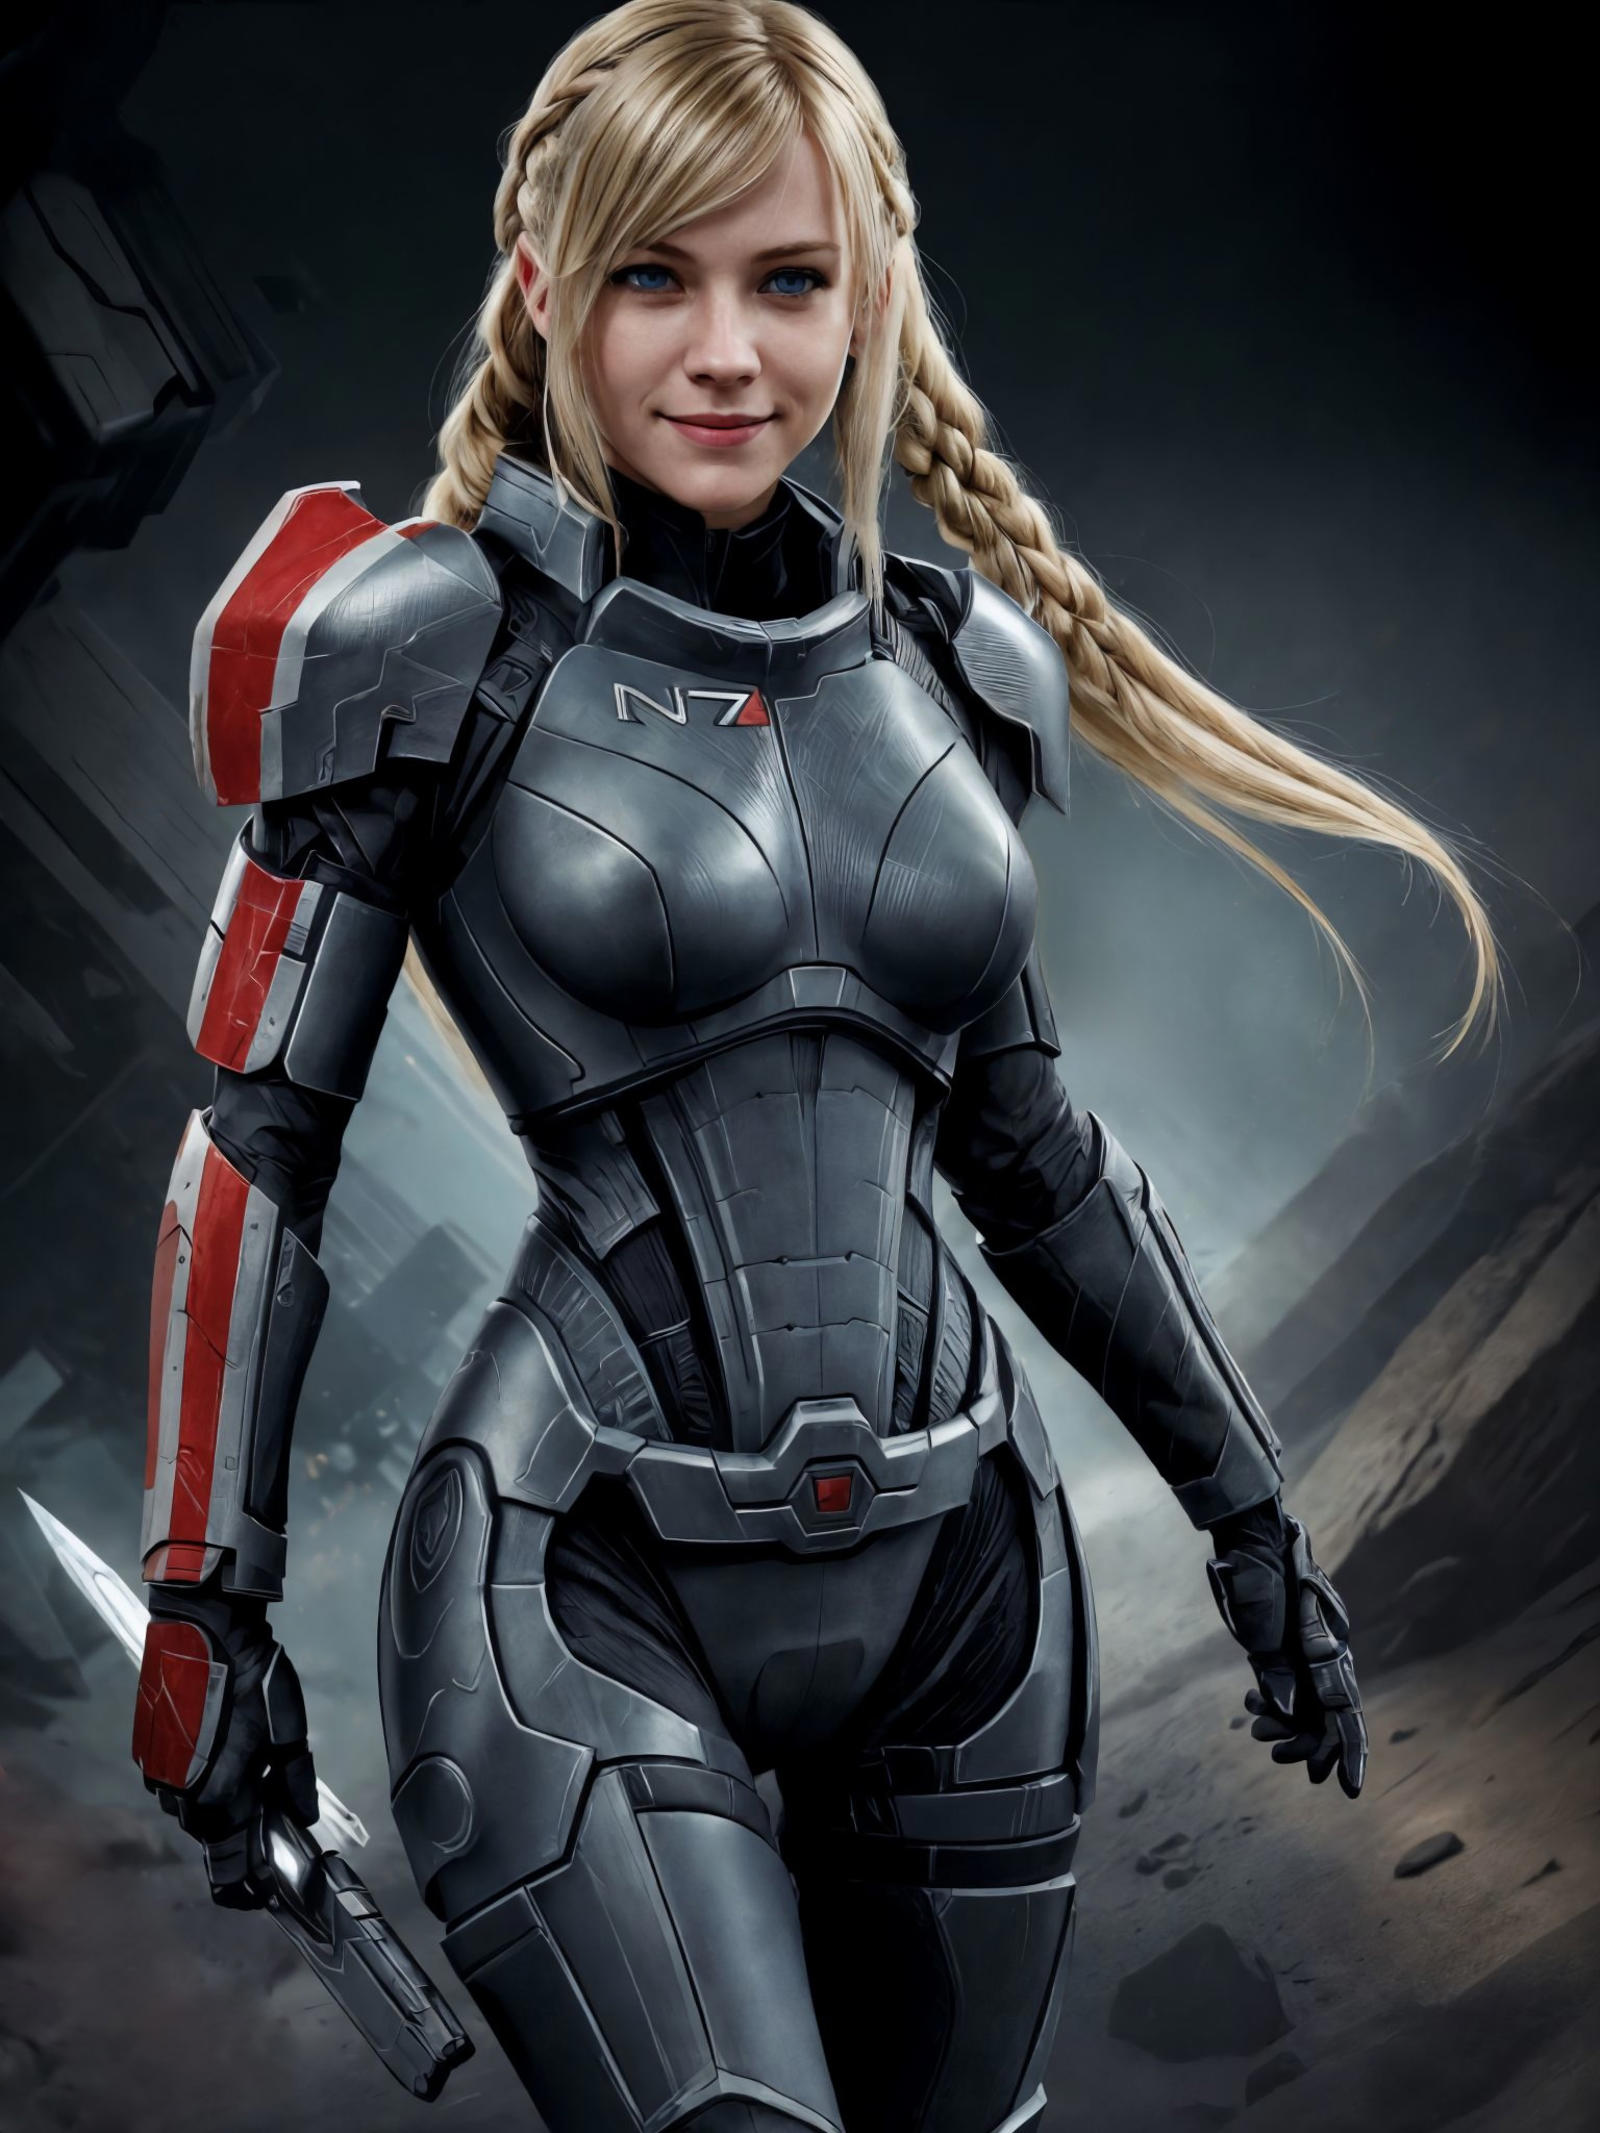 N7 Armor (Mass Effect) LoRA image by J1B